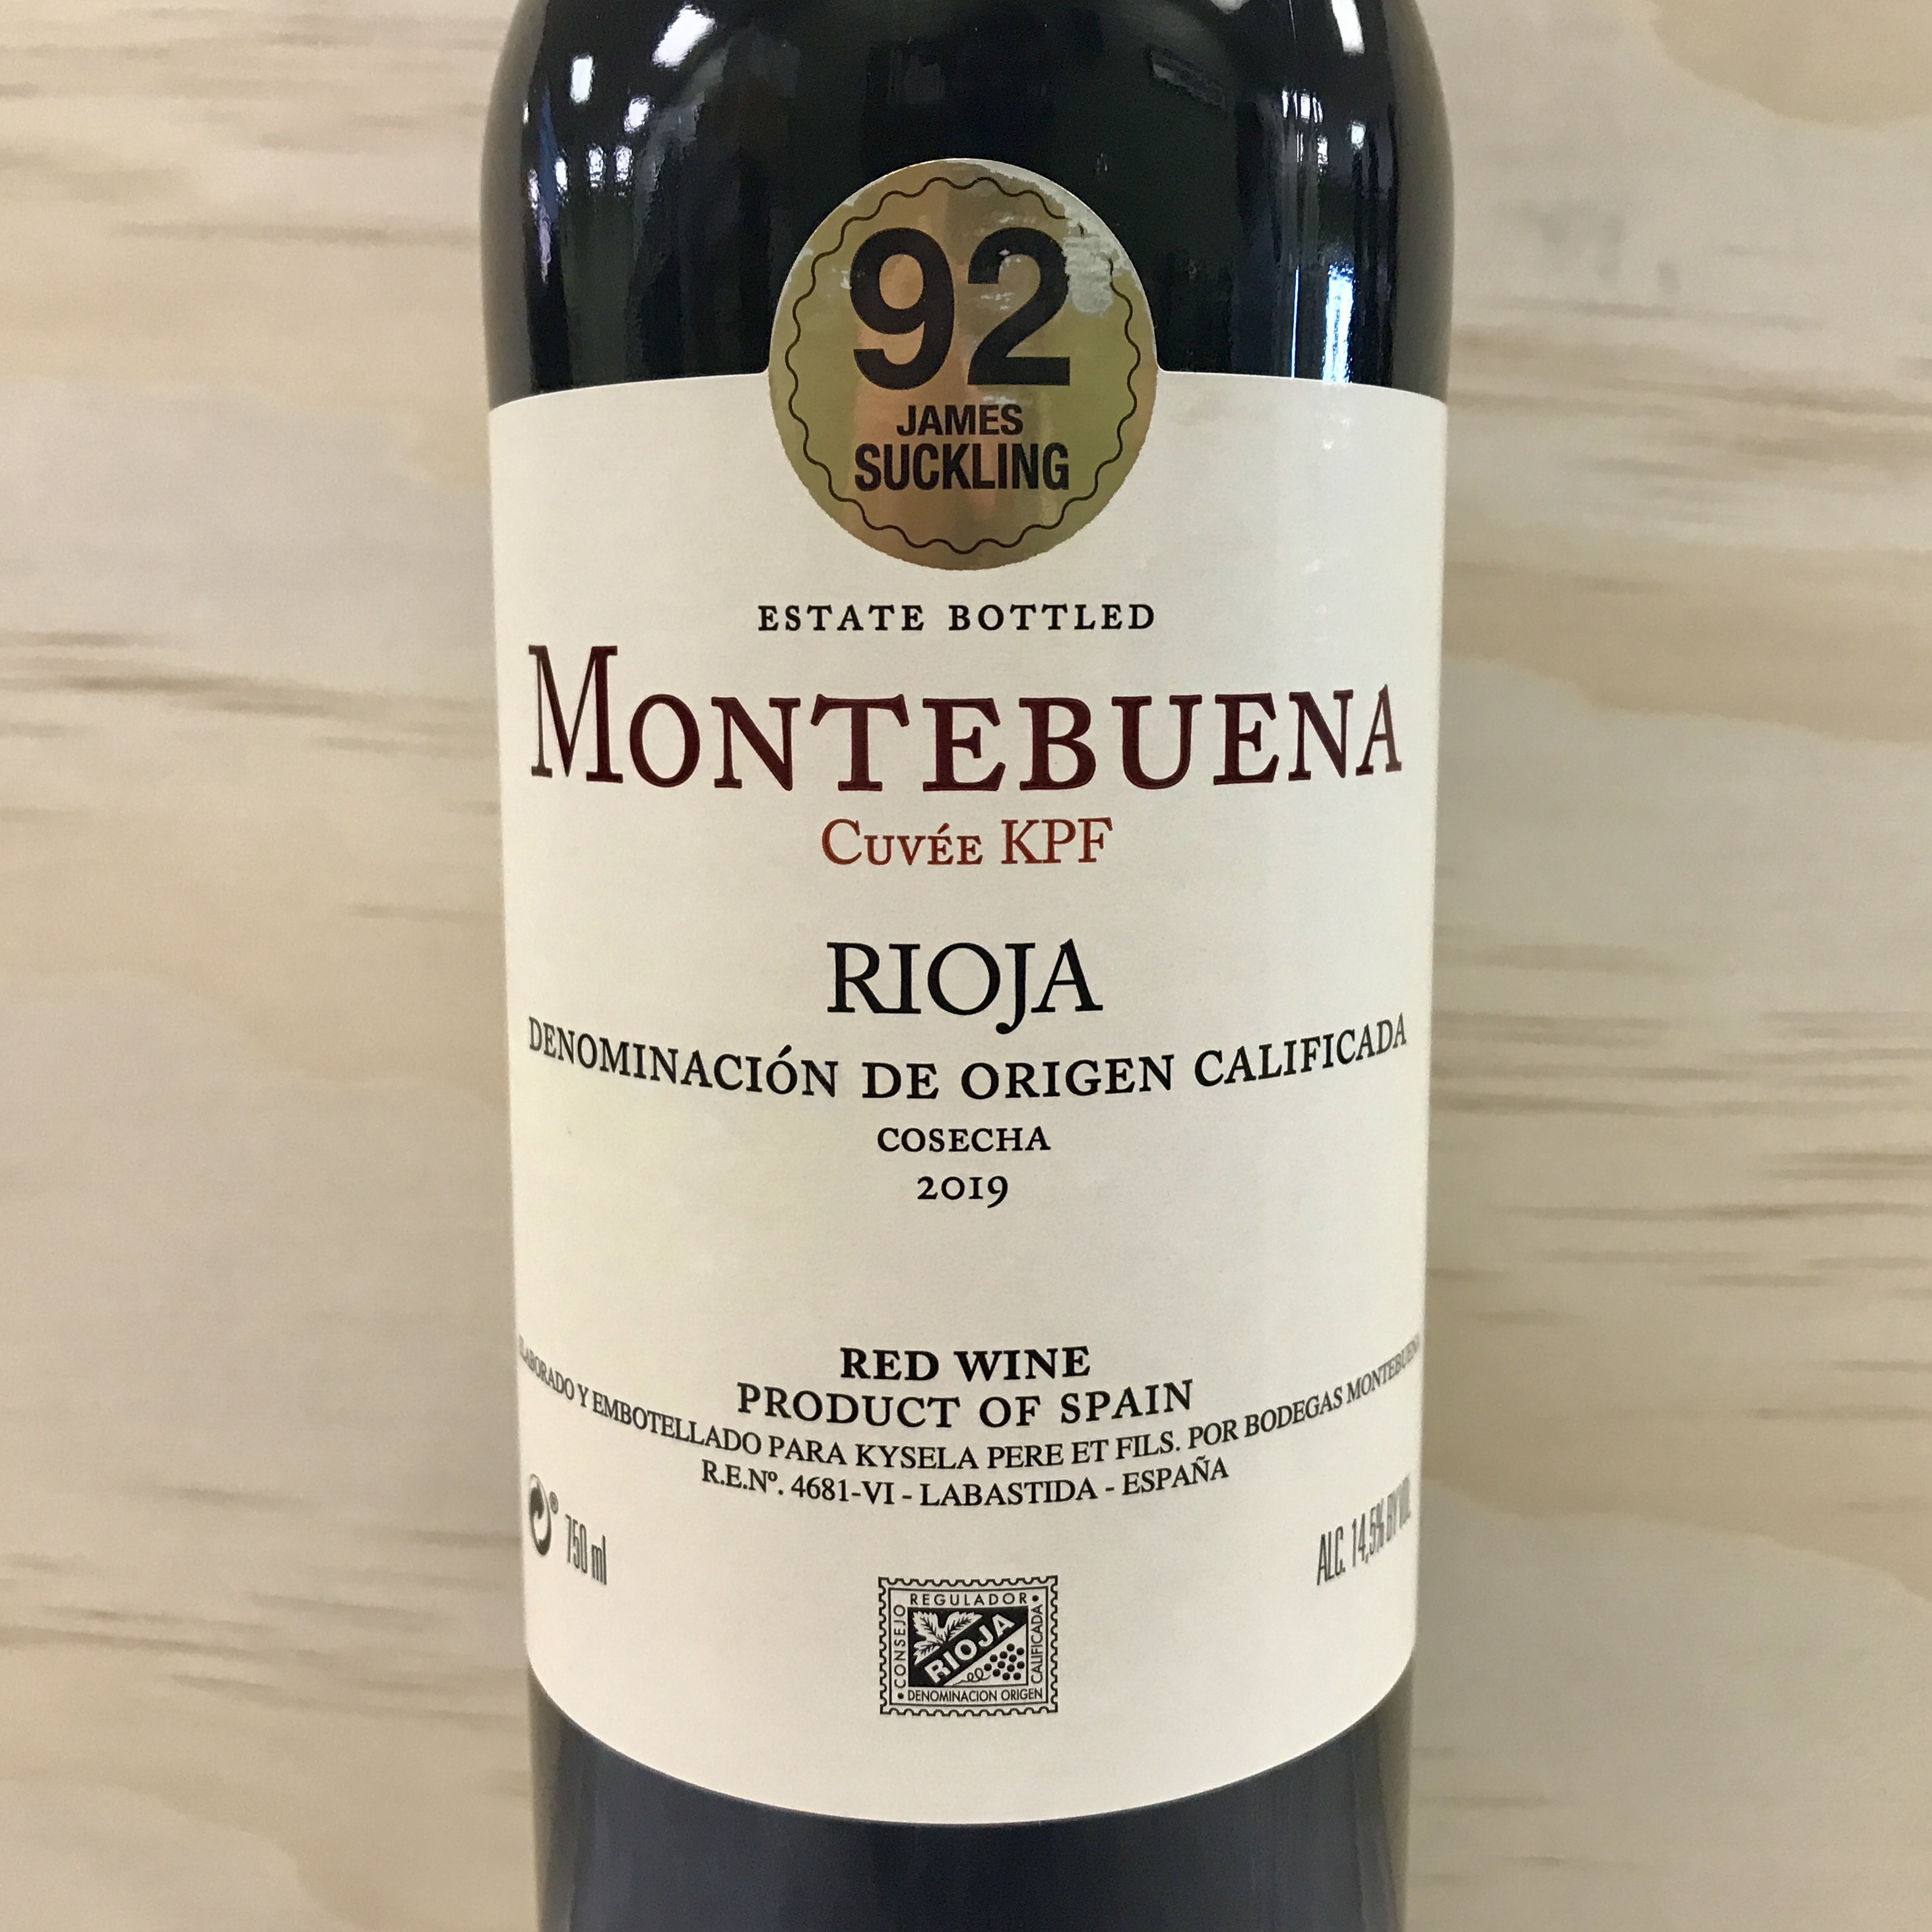 Montebuena Cuvee KPF Rioja 2020